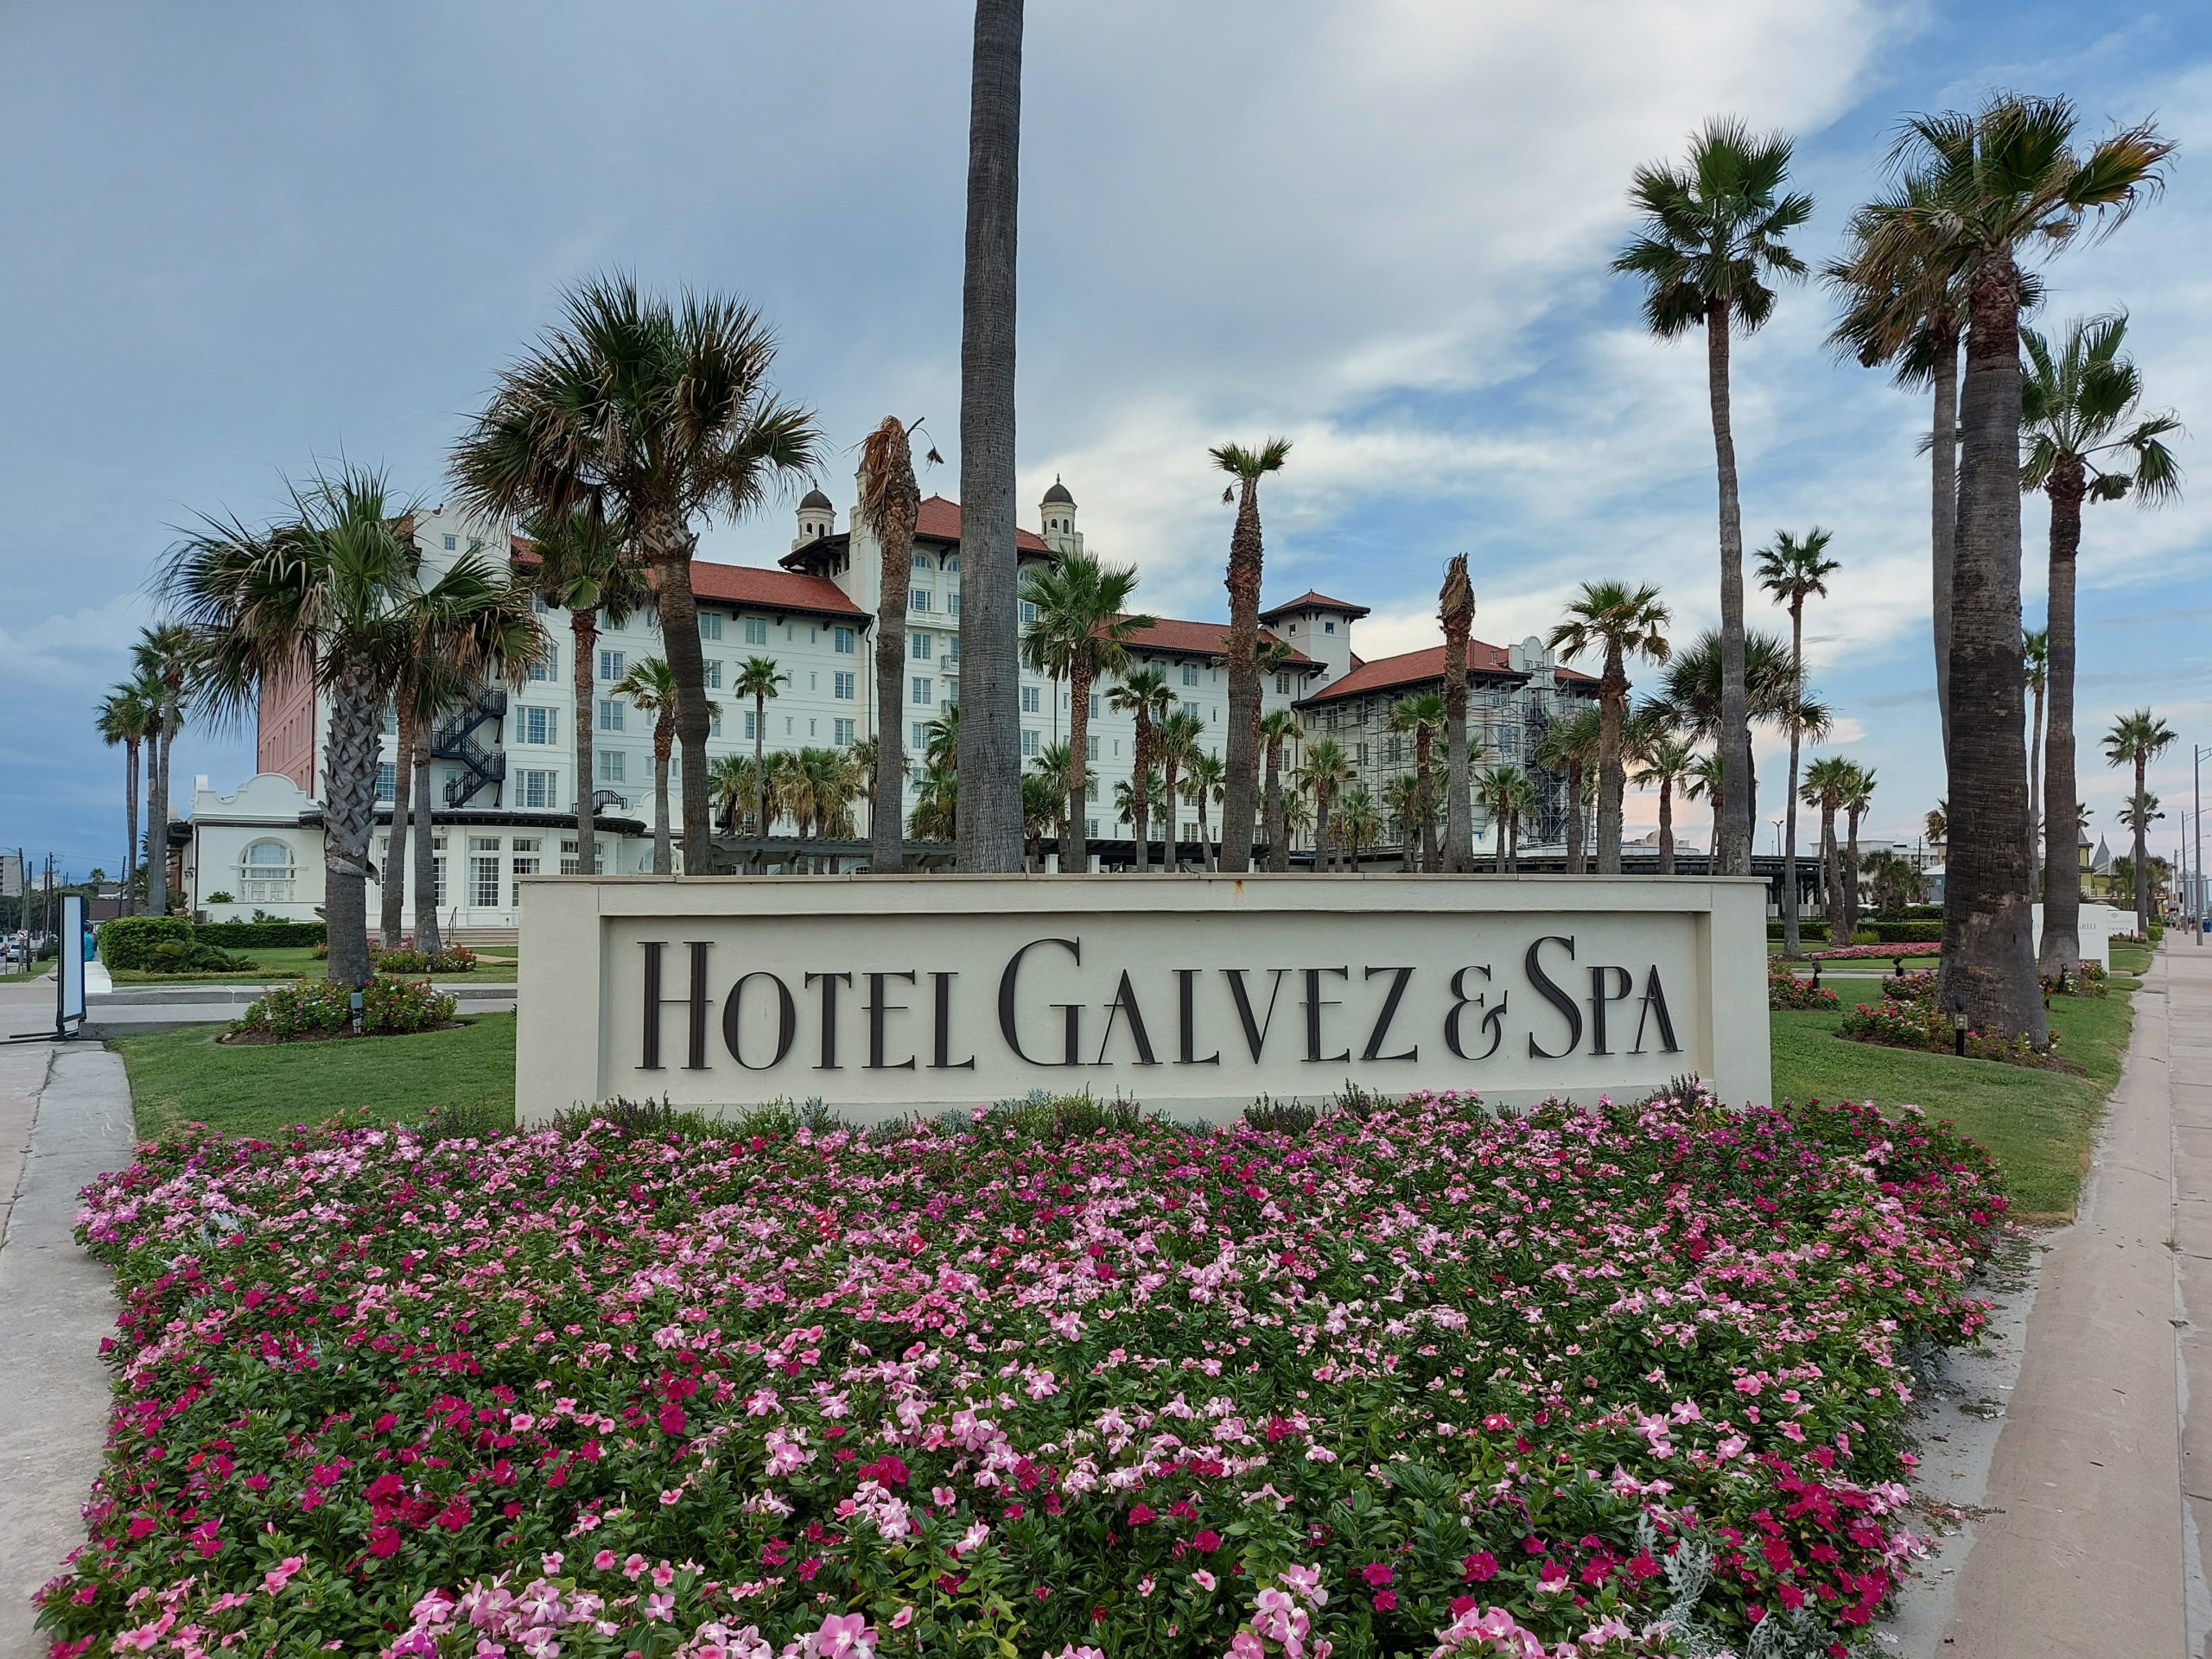 The Galvez Resort & Spa, Galveston Island, Texas / Kimberly Sullivan